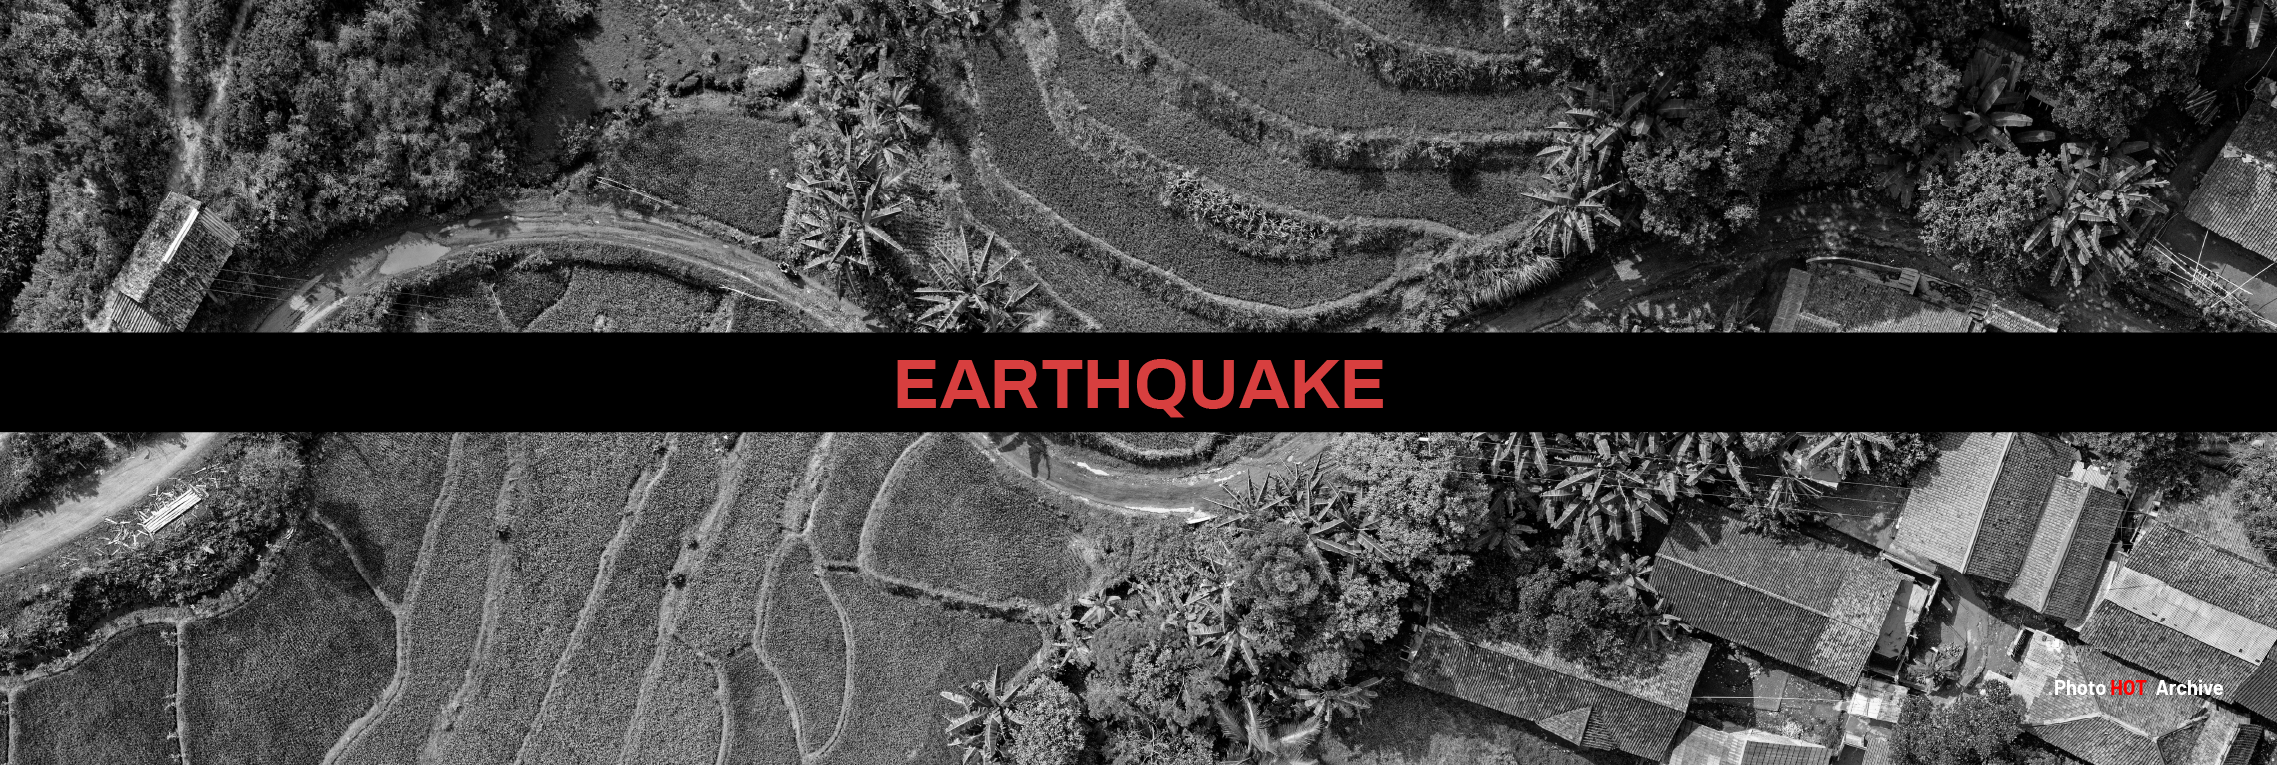 Earthquake - Experimental Damage Assessment (2)